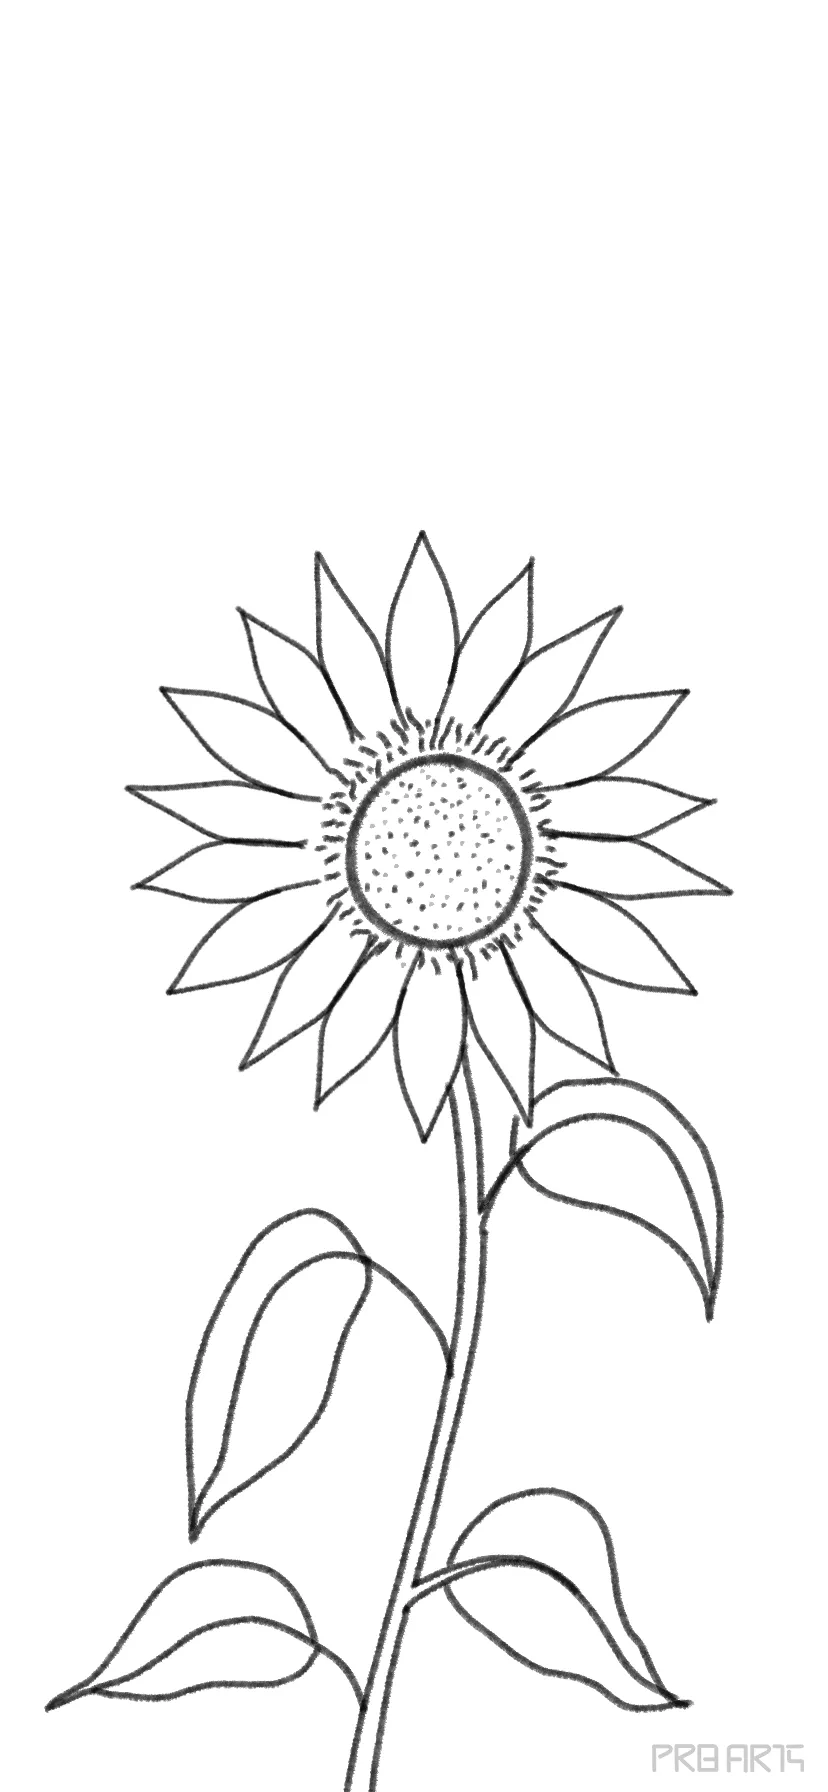 Sketch sunflowers Monochrome floral wildflower  Stock Illustration  63559832  PIXTA